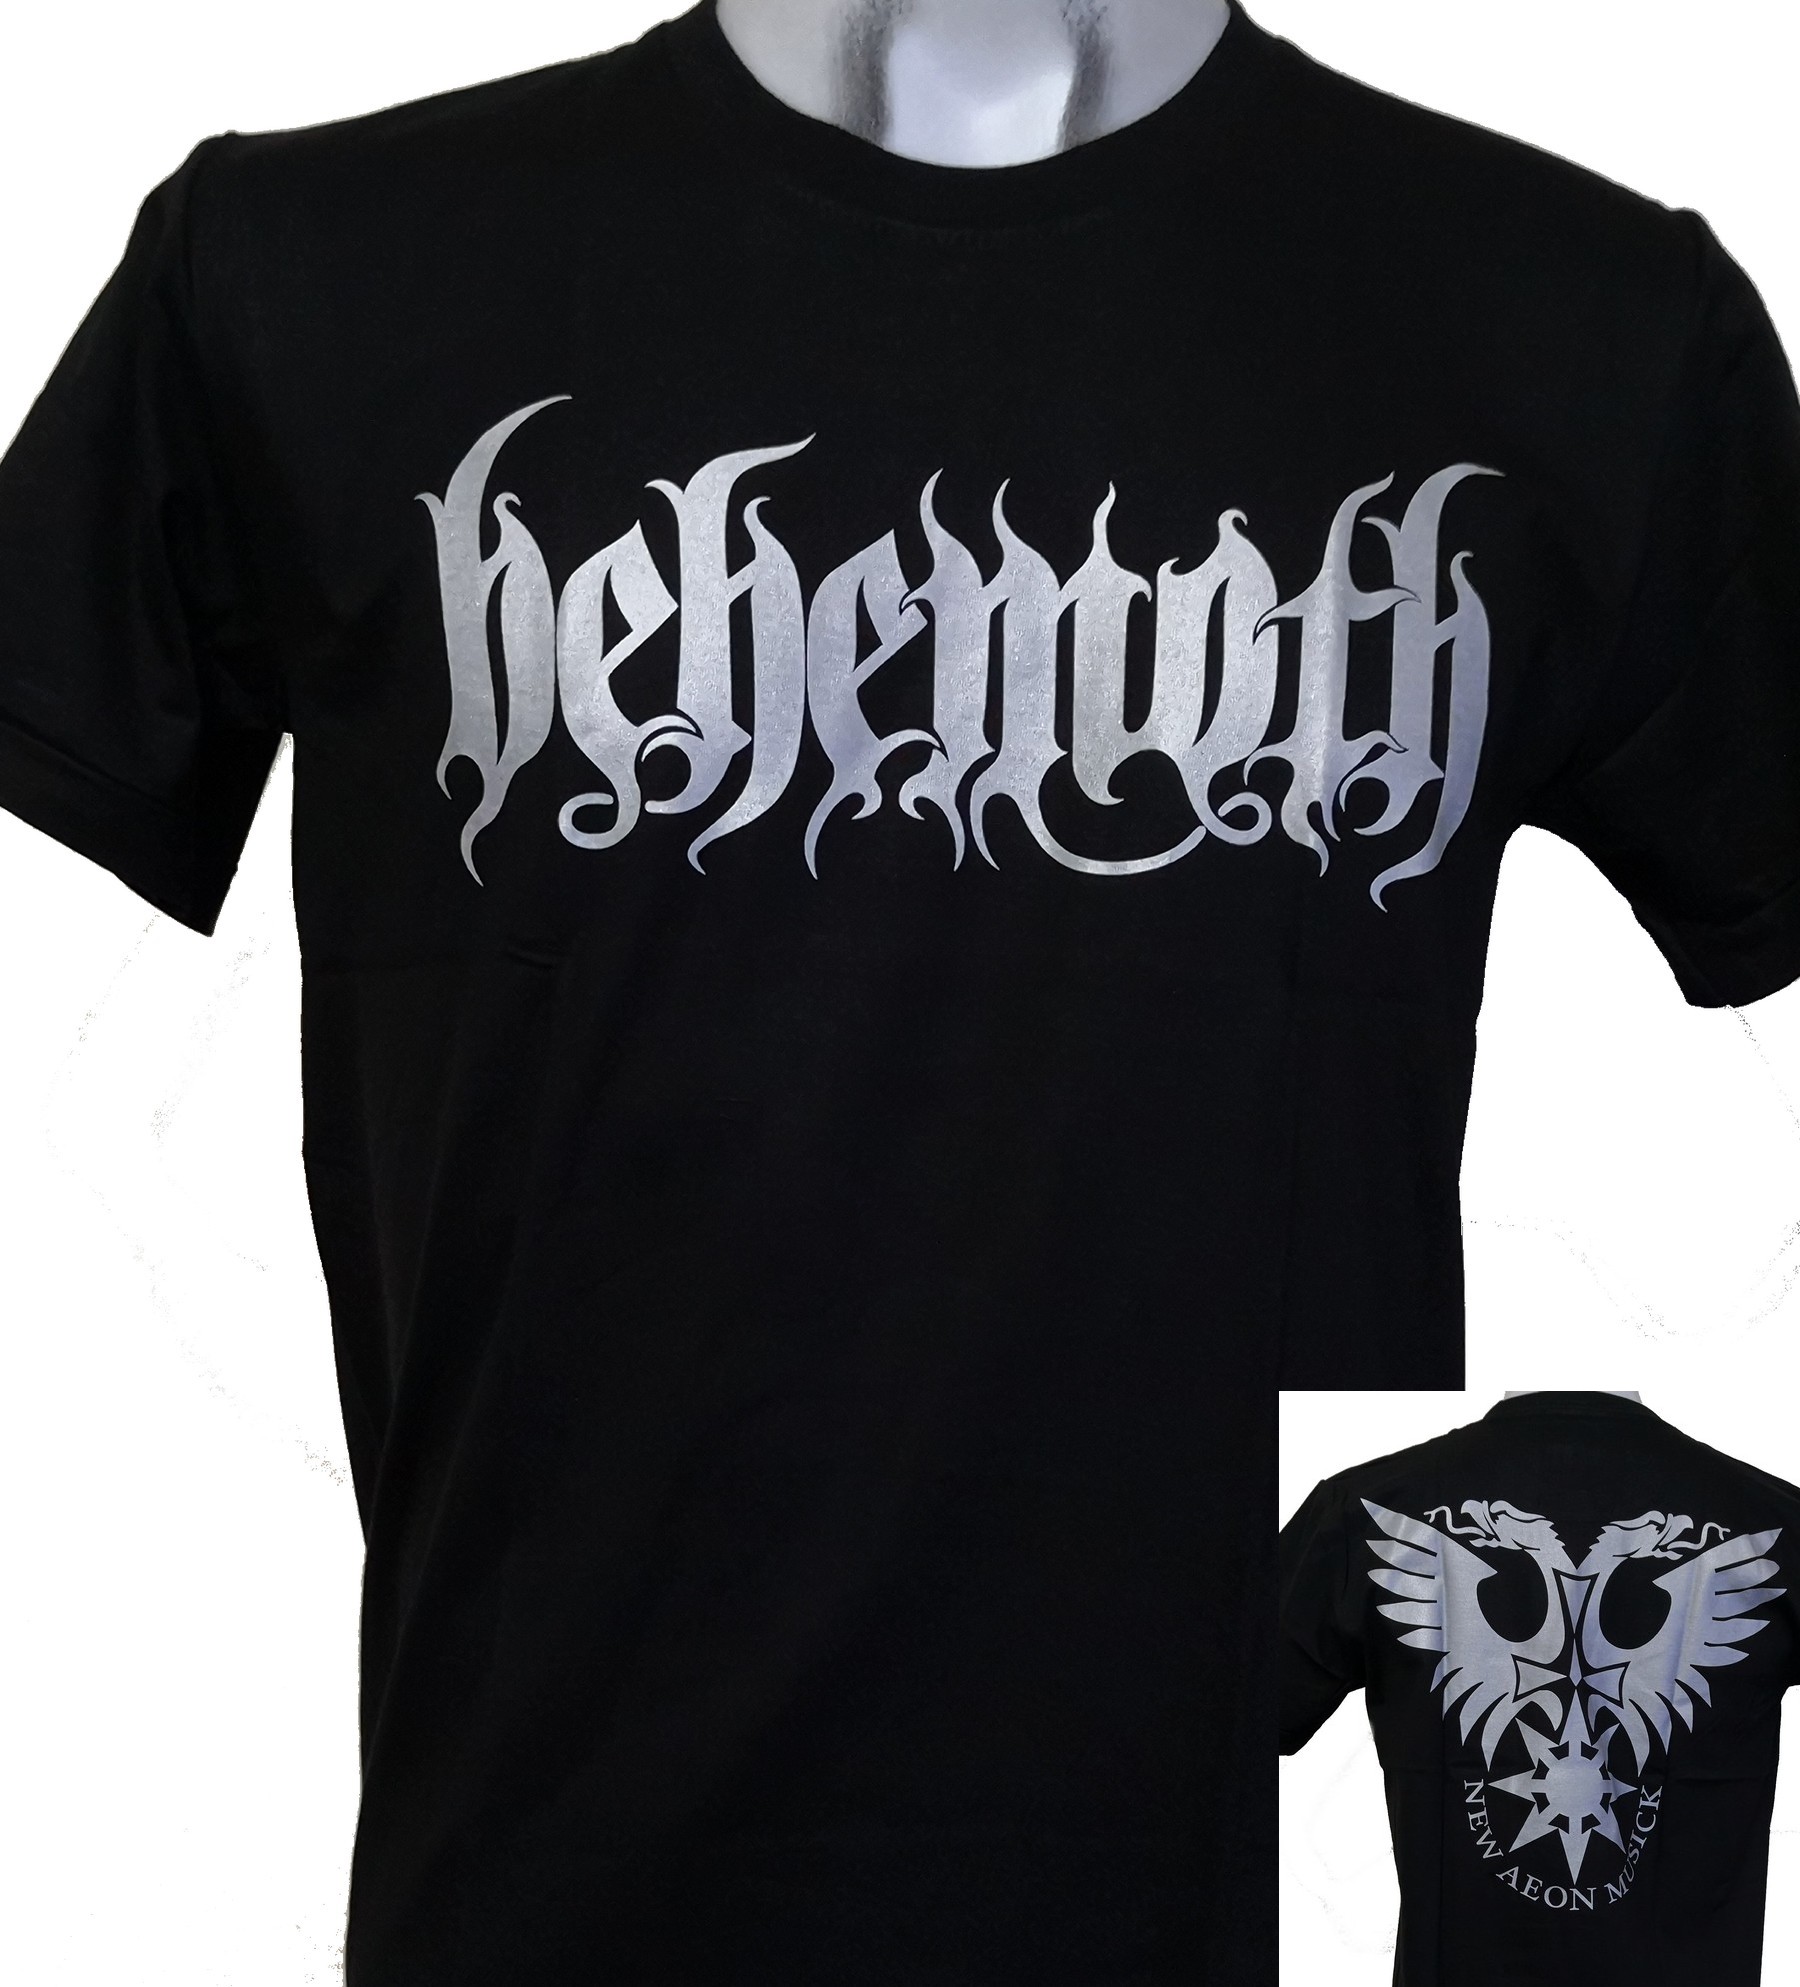 Behemoth t-shirt size S